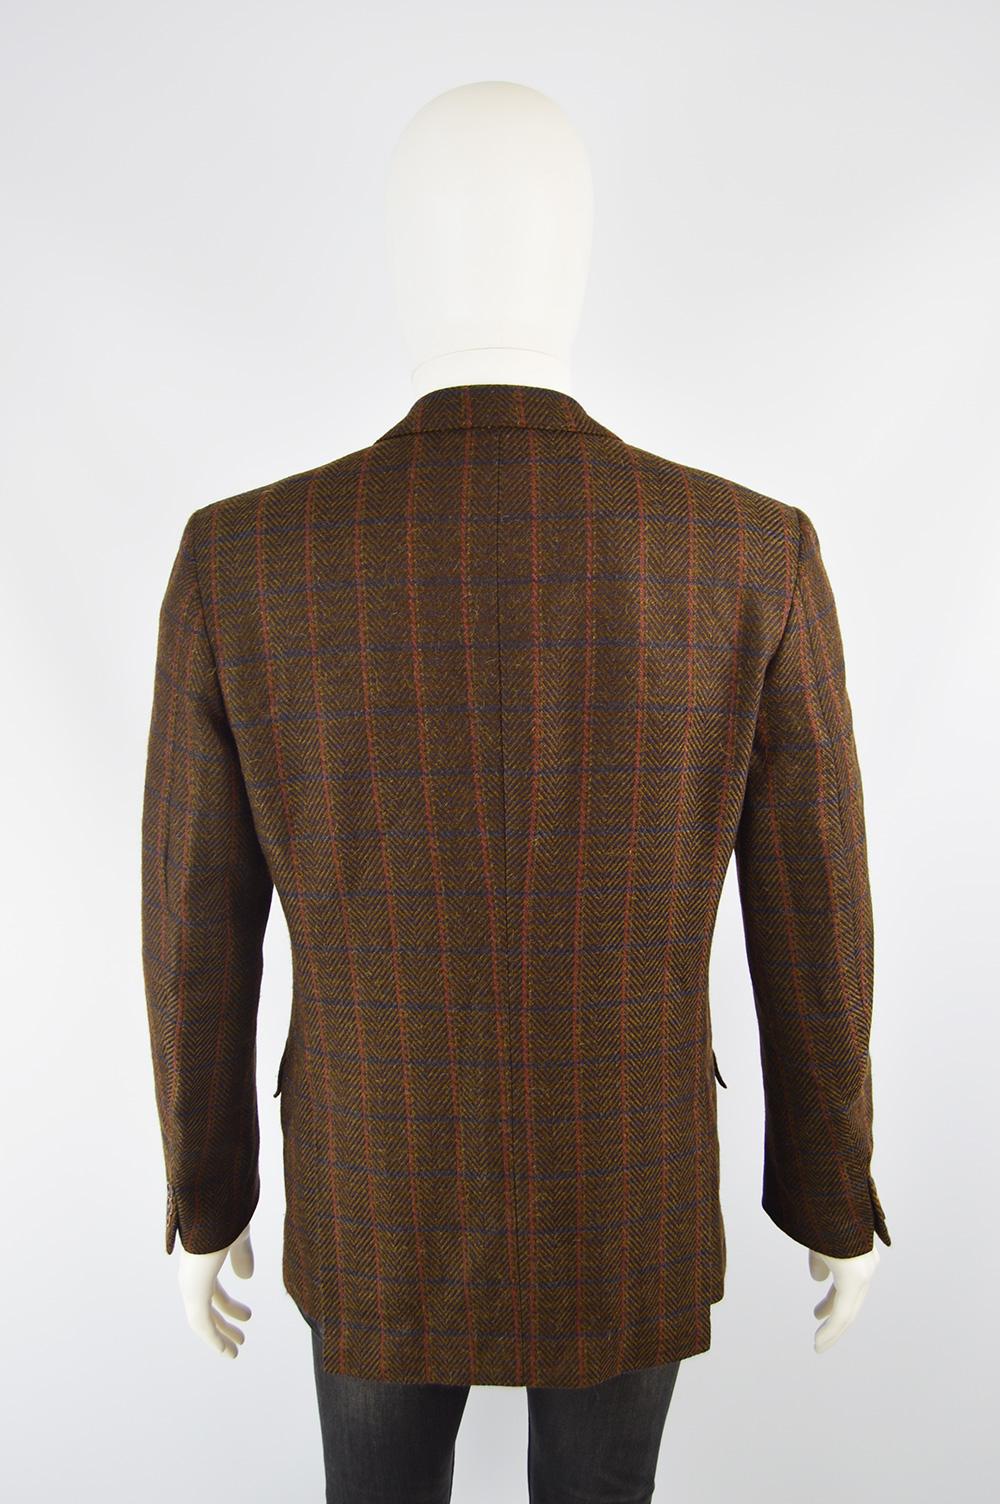 Yves Saint Laurent Rive Gauche Men's Brown Checked Wool & Mohair Jacket 1970s 1